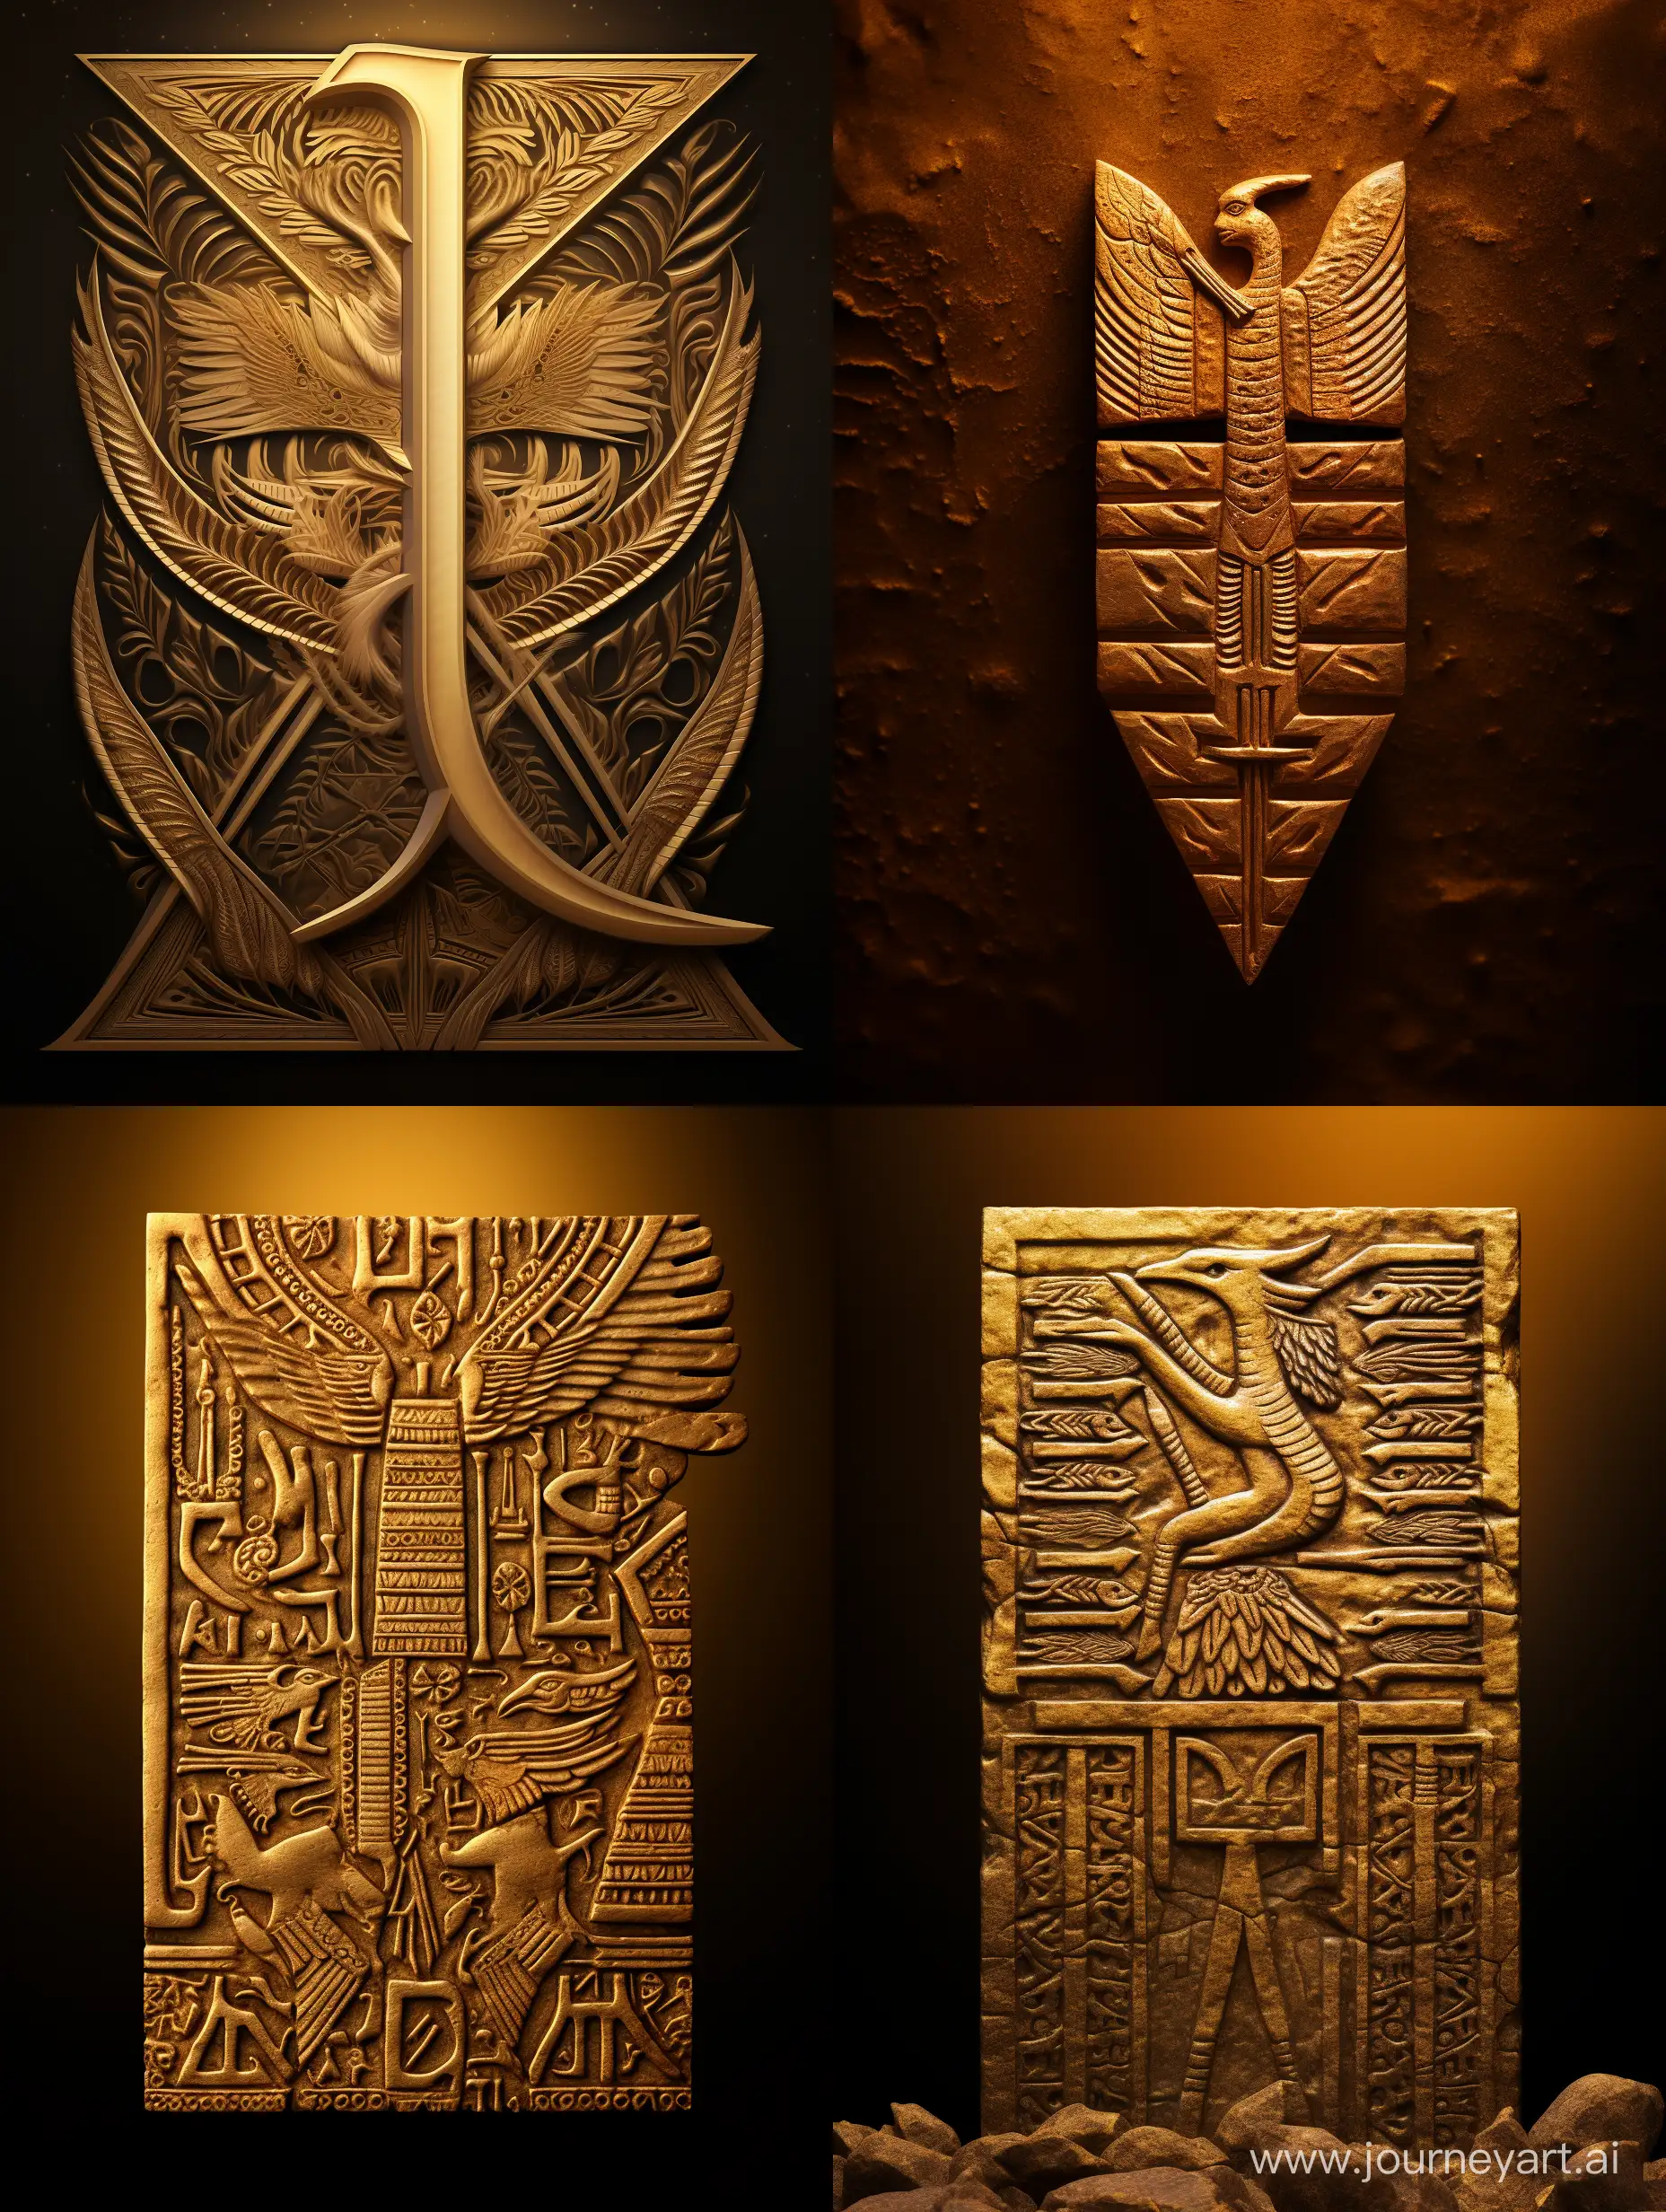 freedom symbol in Sumerian language (Ama-gi) in cuneiform writing form in golden tones
